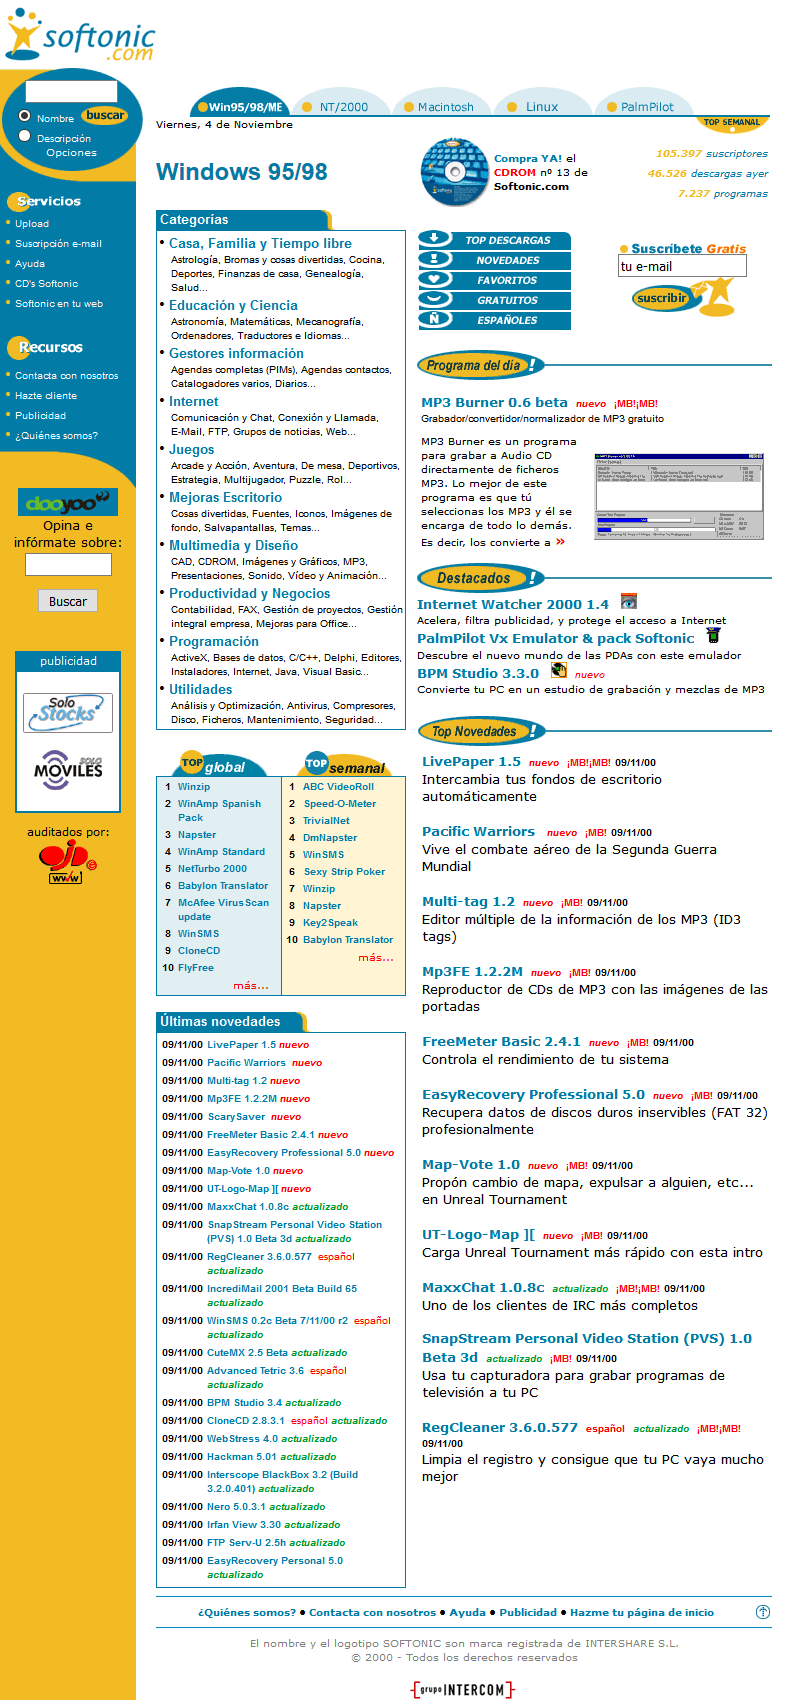 Softonic website in 2000